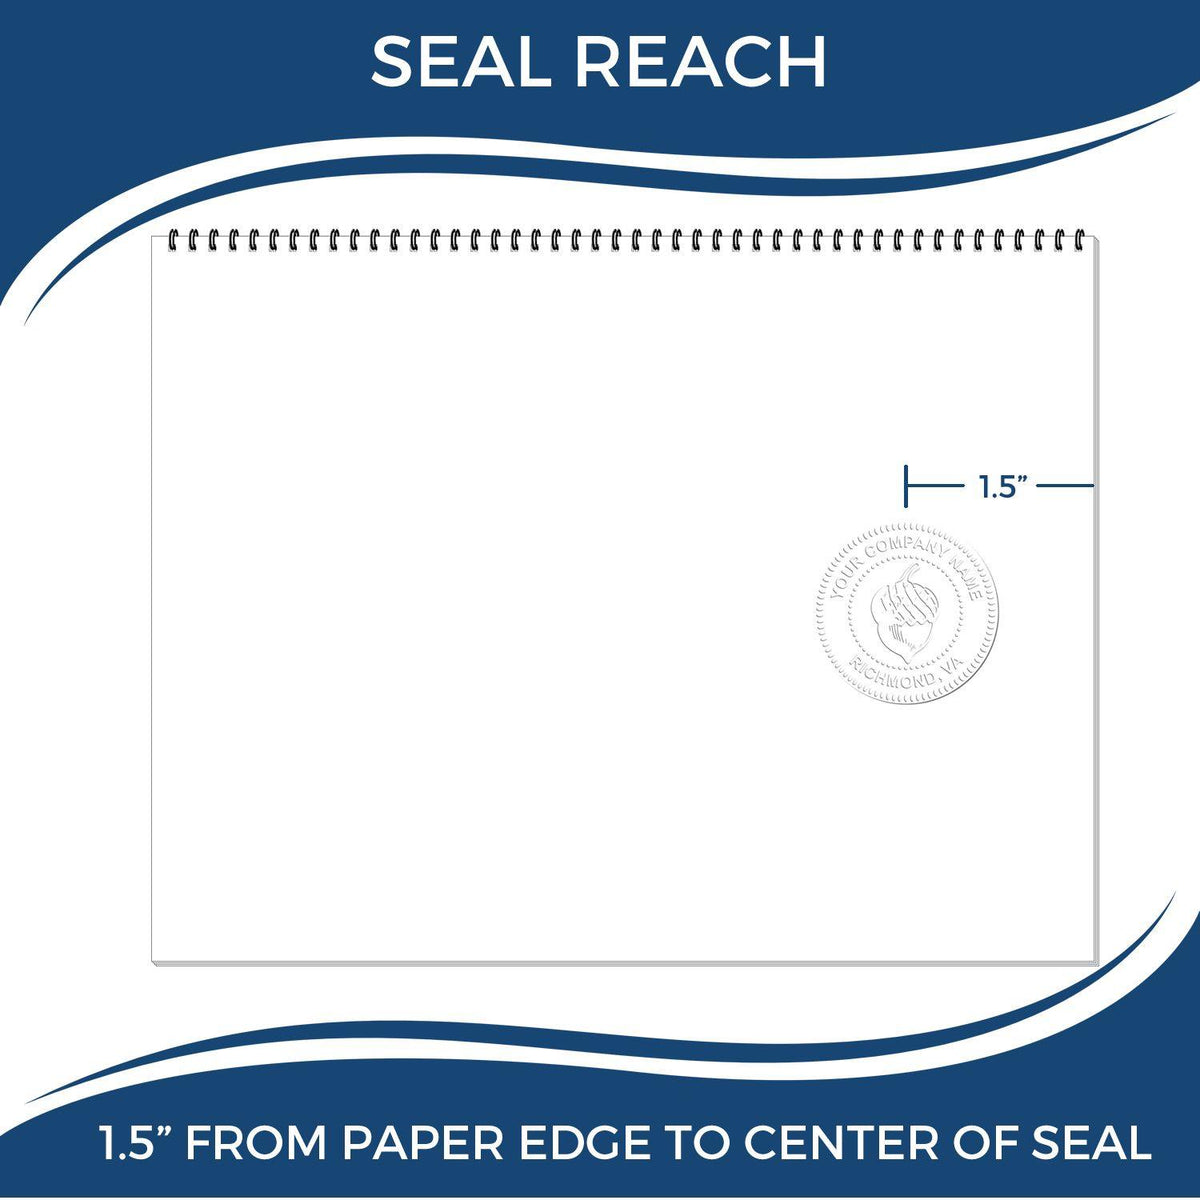 Professional Blue Soft Seal Embosser - Engineer Seal Stamps - Embosser Type_Handheld, Embosser Type_Soft Seal, Type of Use_Professional